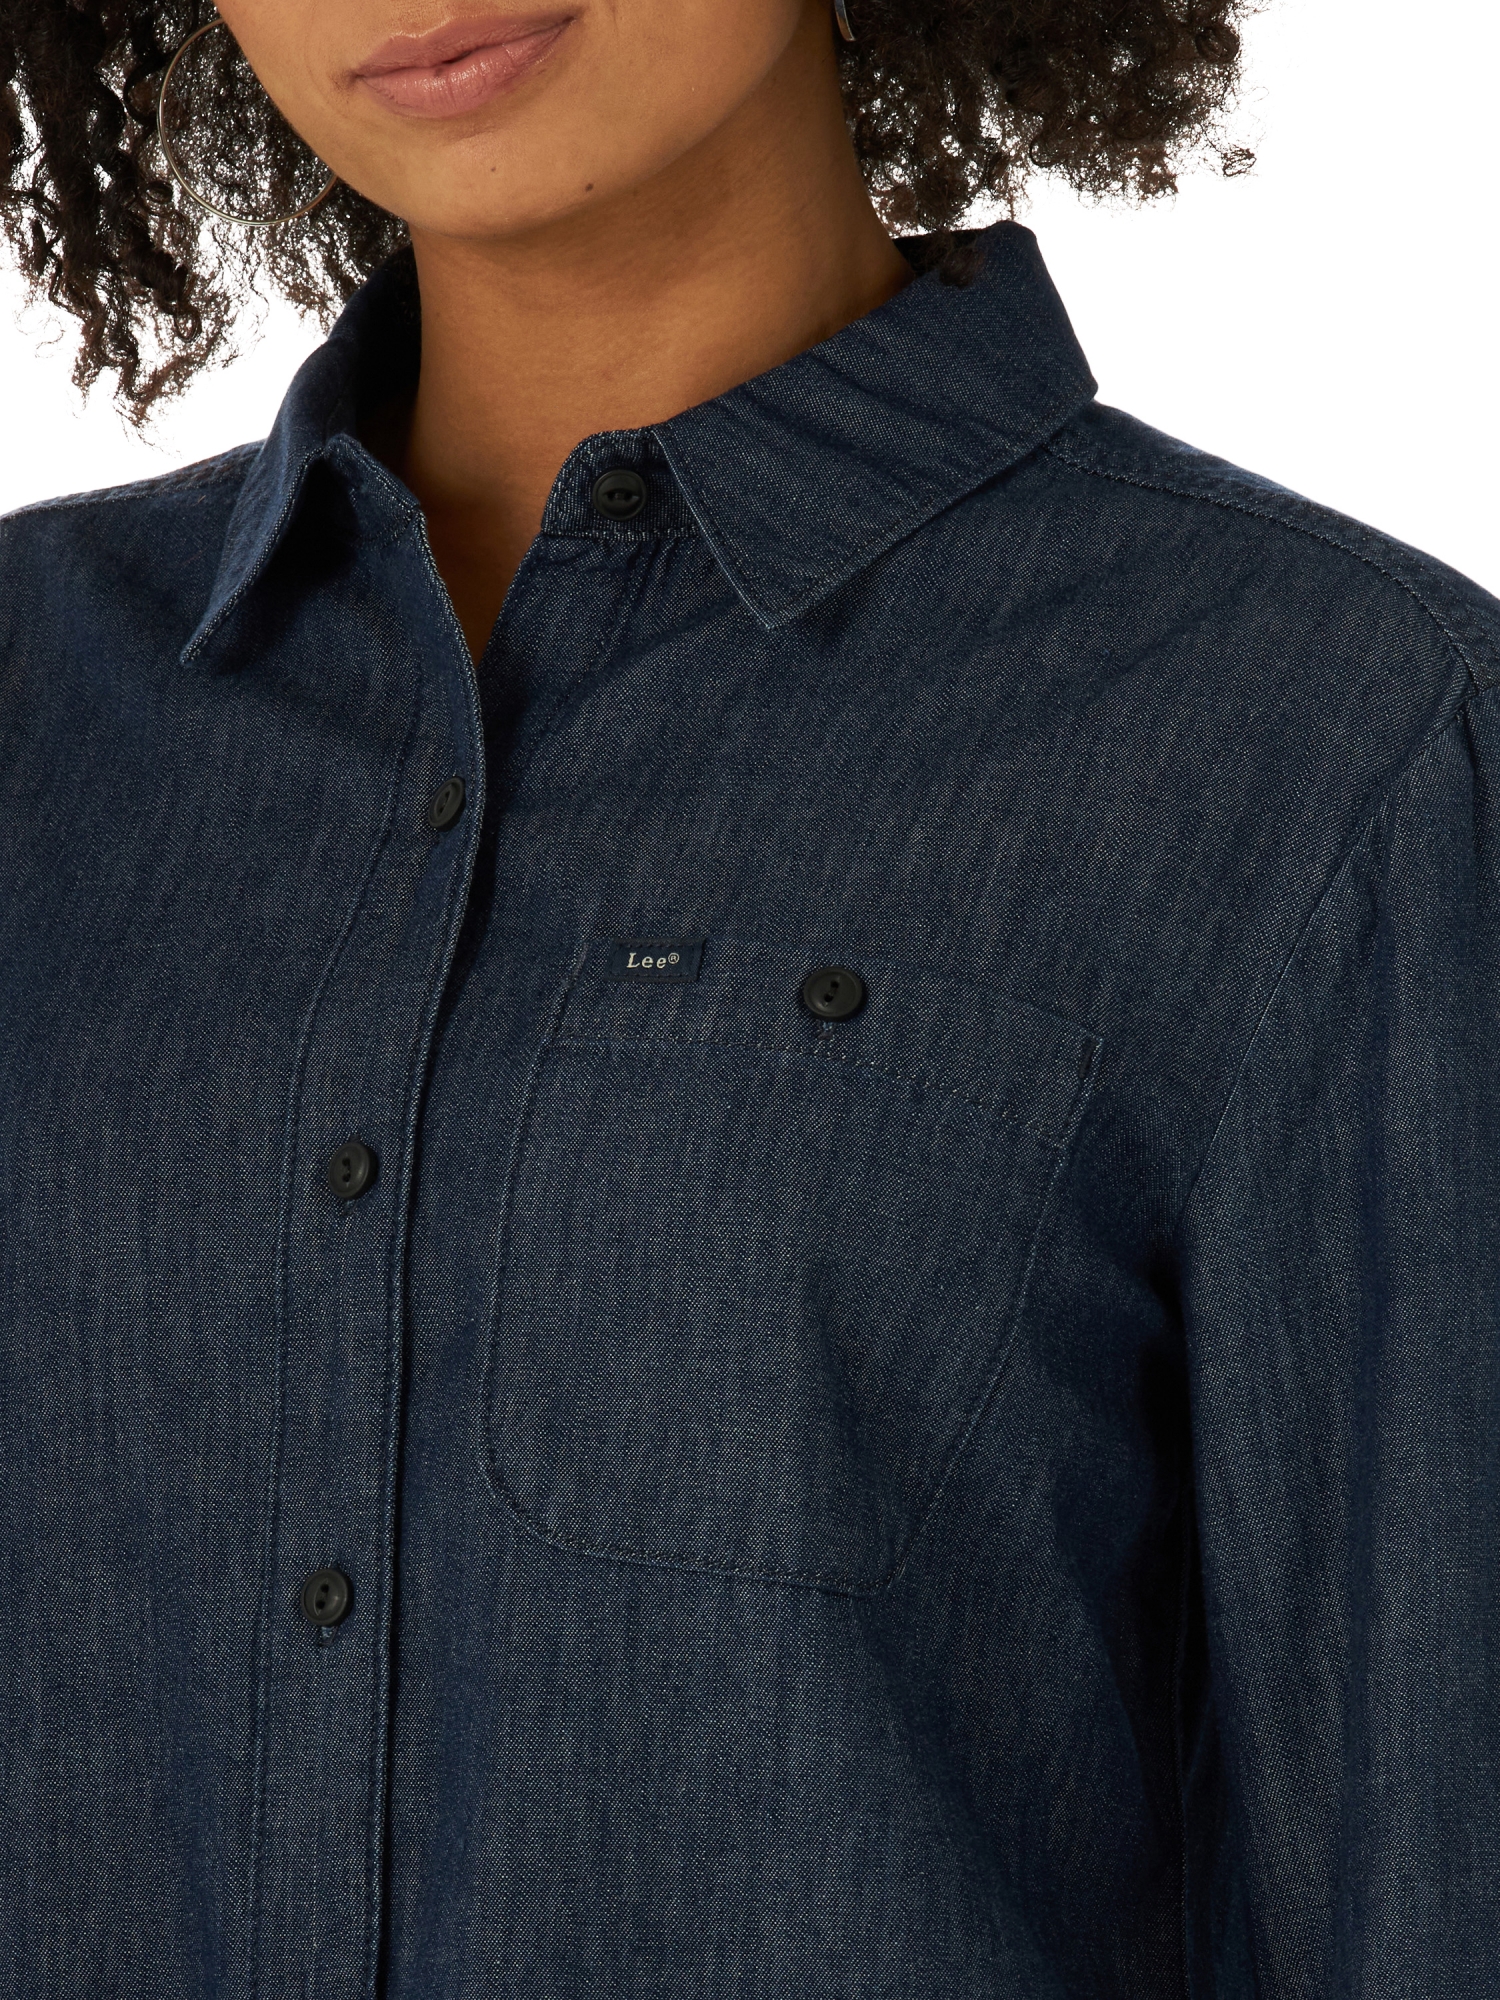 Lee Women's All Purpose Denim Long Sleeve Shirt - image 4 of 5